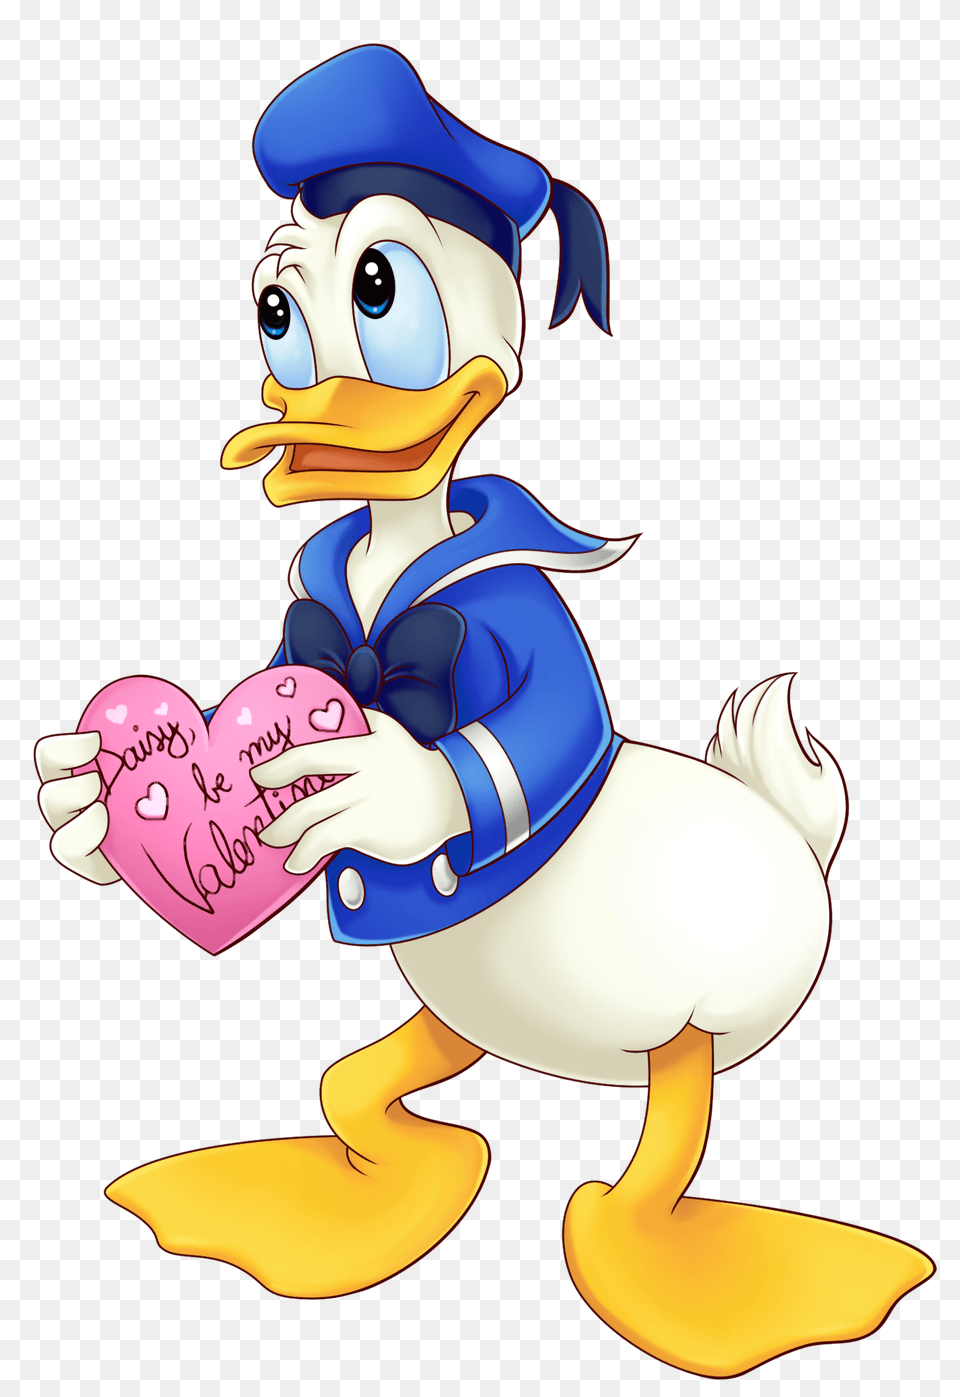 Donald Duck In Love, Cartoon, Book, Comics, Publication Png Image